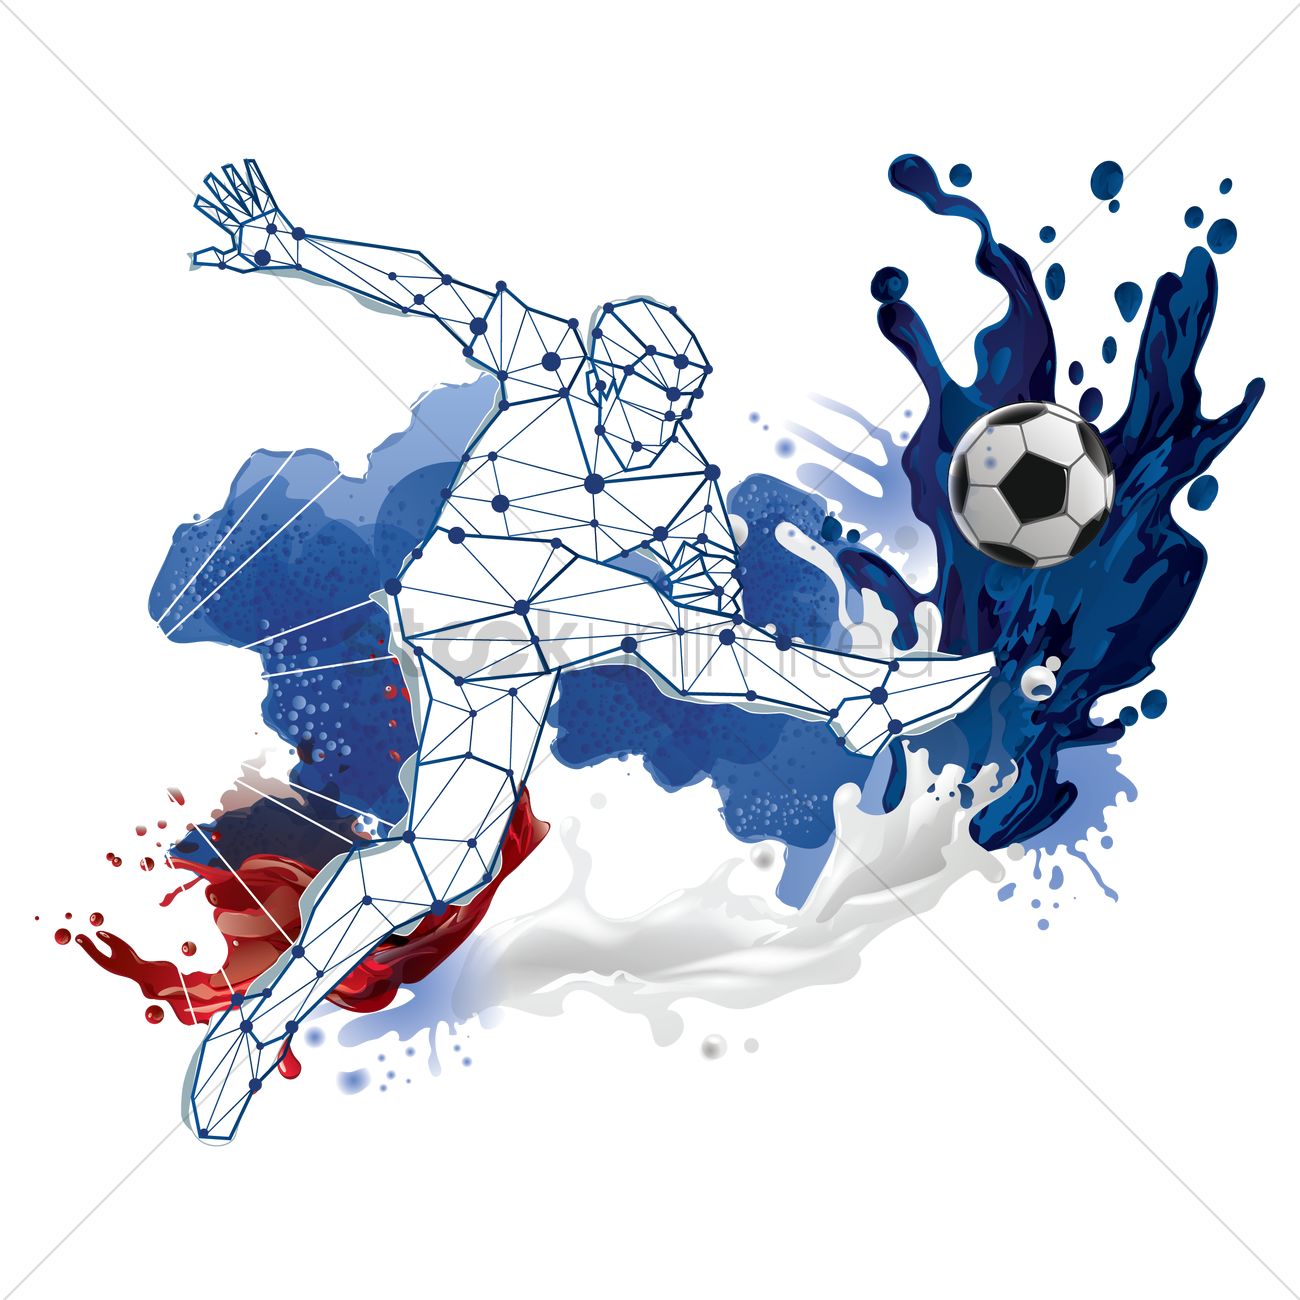 Ball, Football, Soccer, Sport